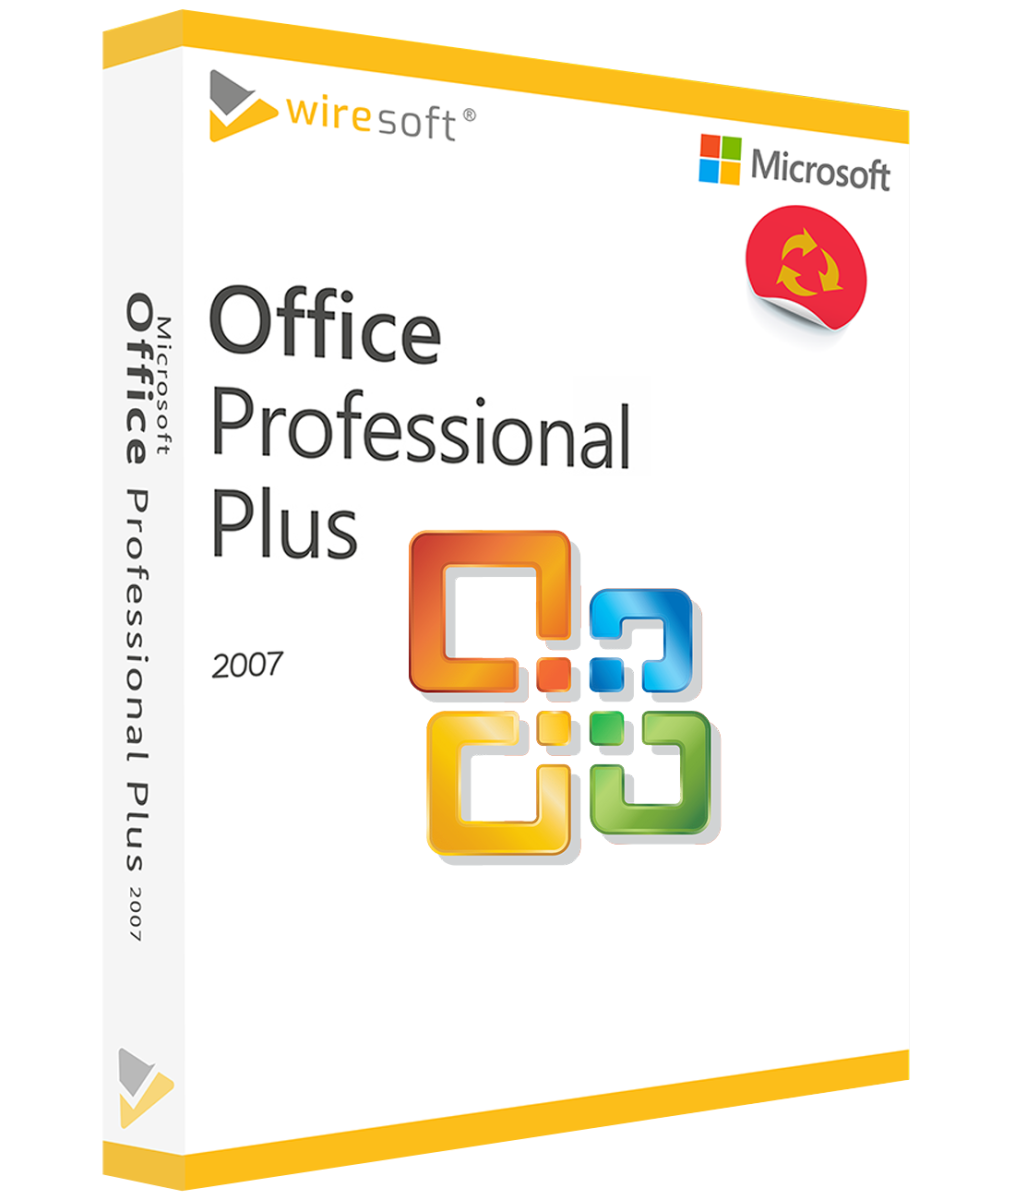 Office 2007 Microsoft Office For Windows Office Tarkvarapood Wiresoft Osta Litsentse Internetis 9434